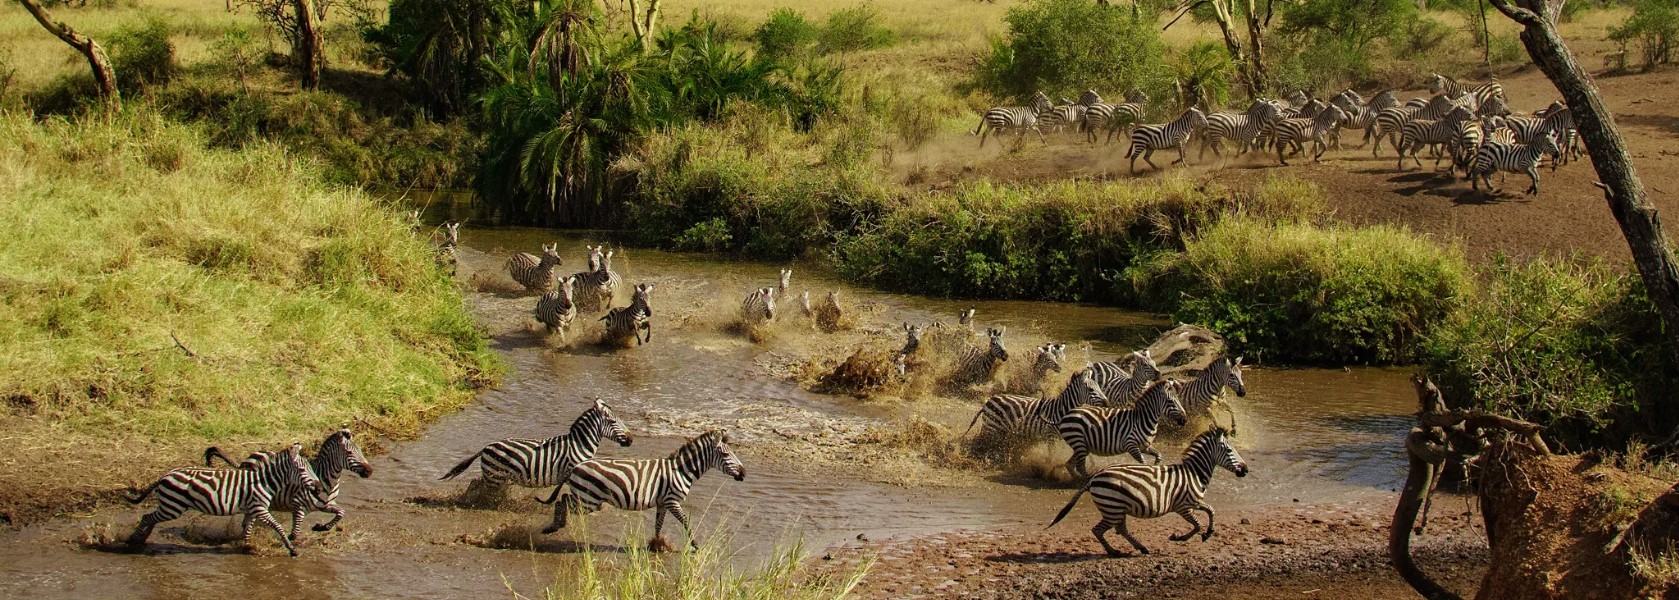 Untamed Tanzania Safari-8 Days